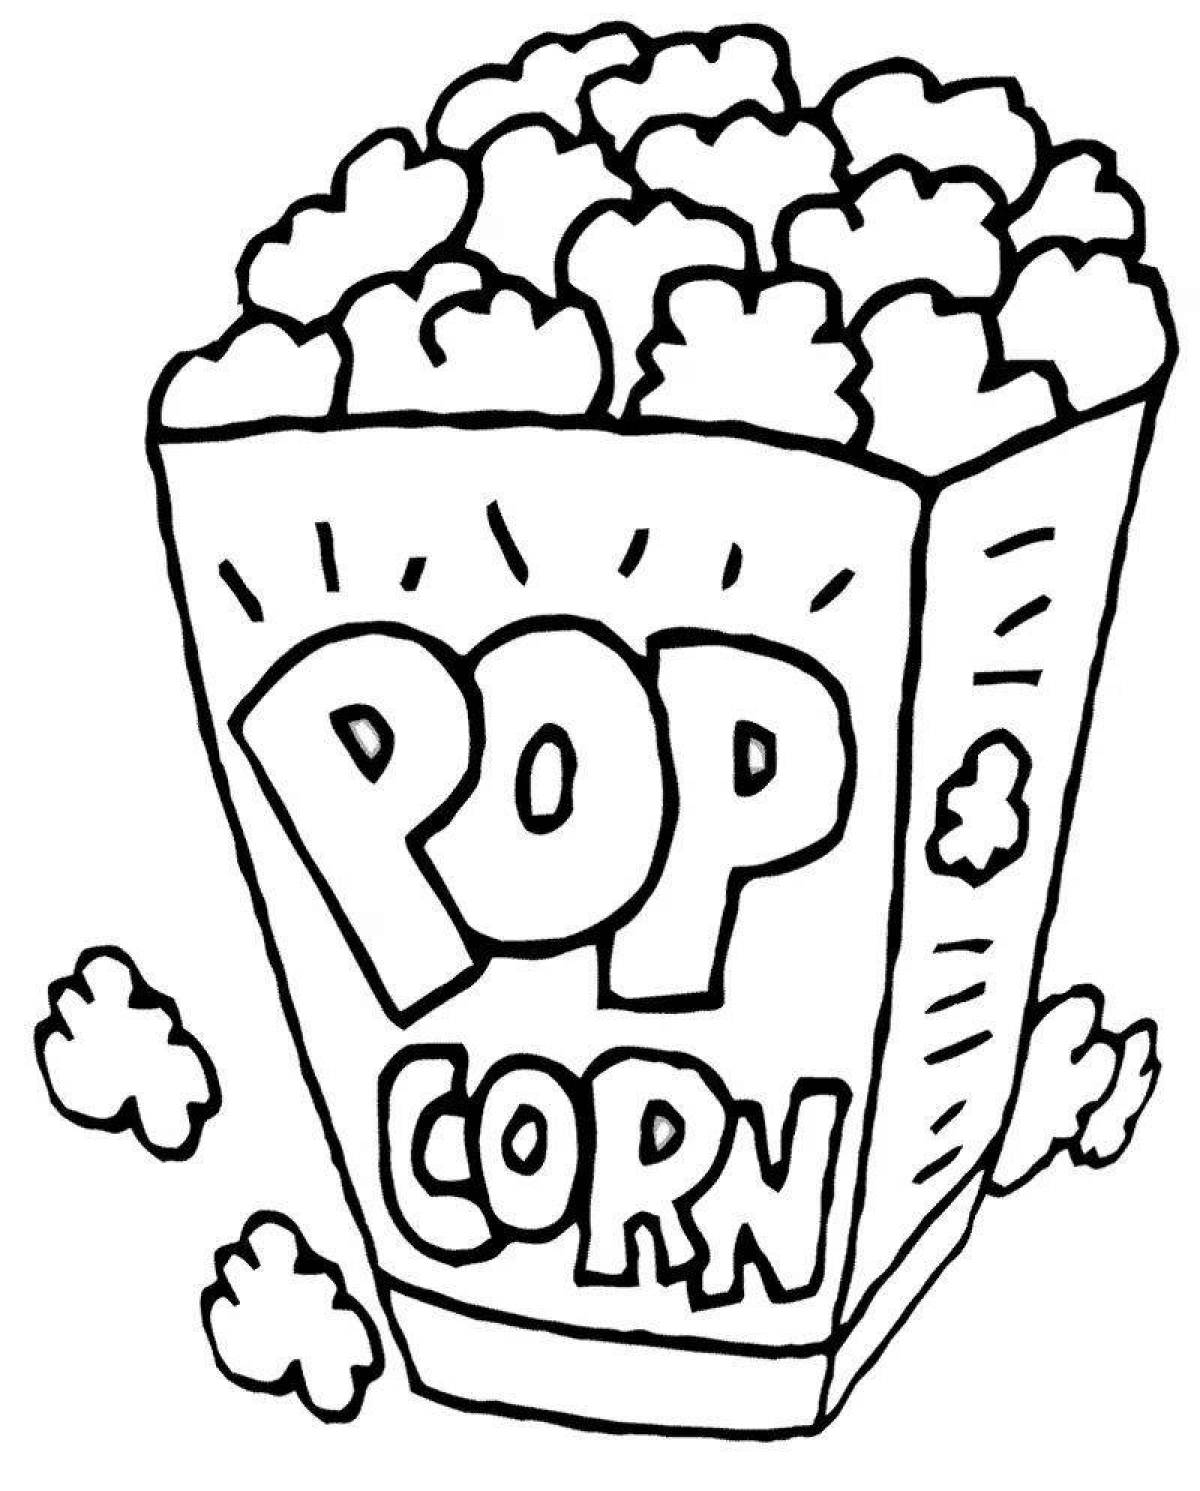 Children's popcorn #6